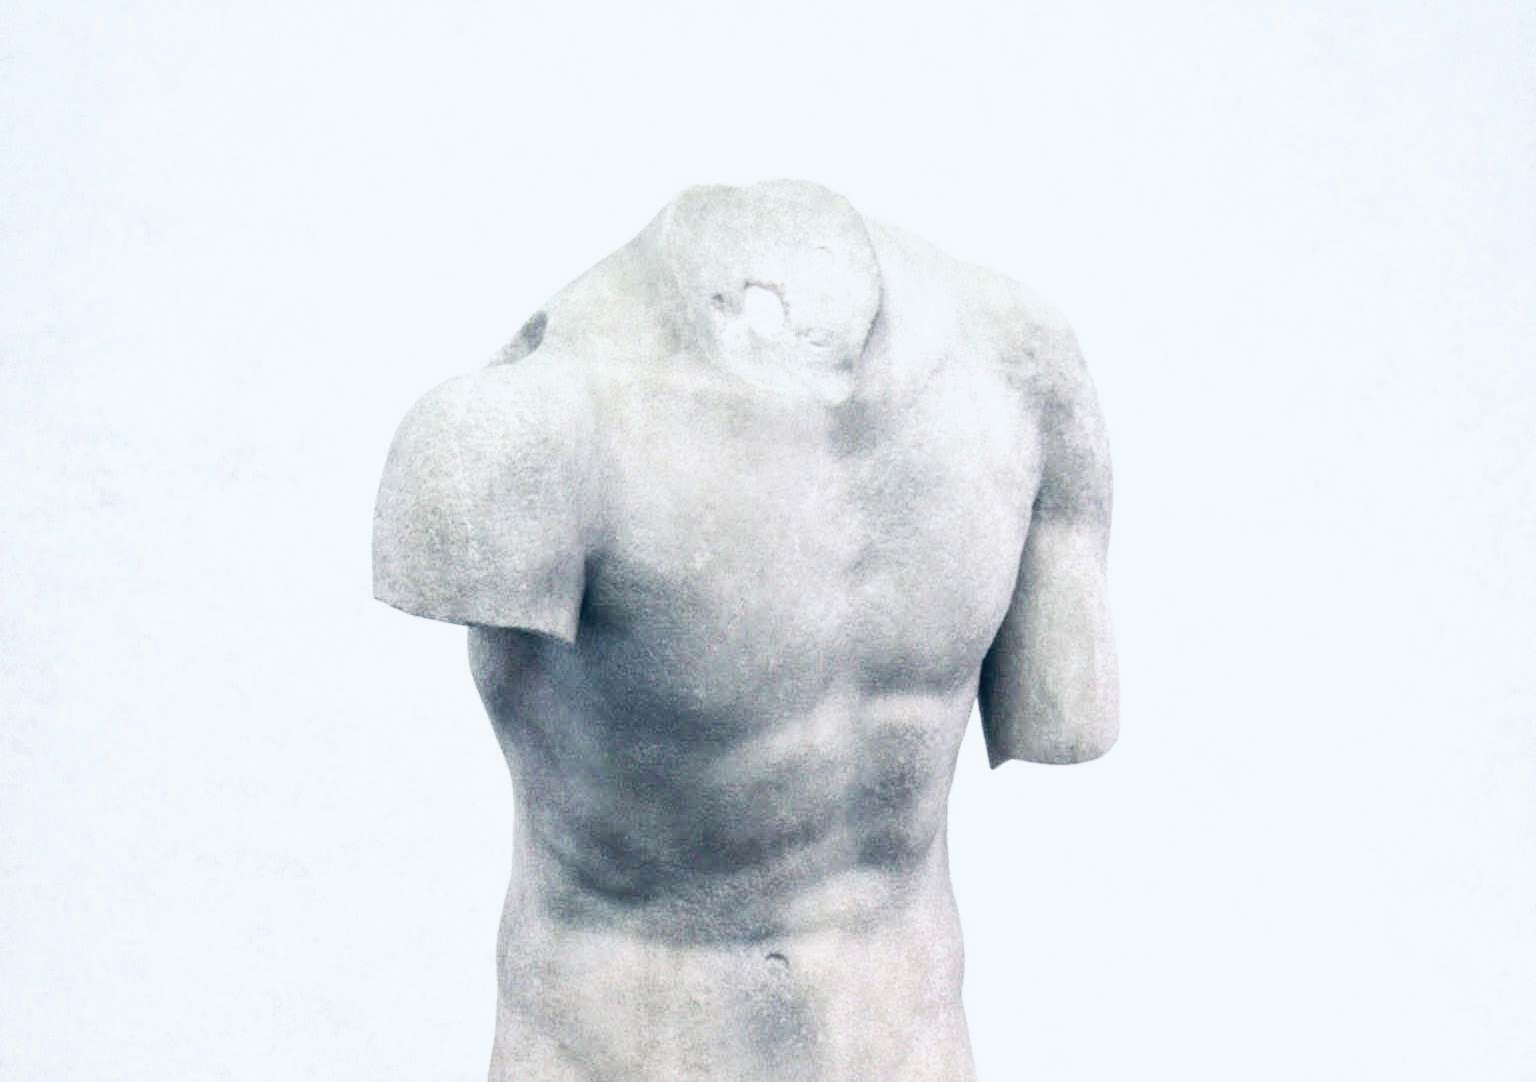 a stone statue of a torso with no head representing headless